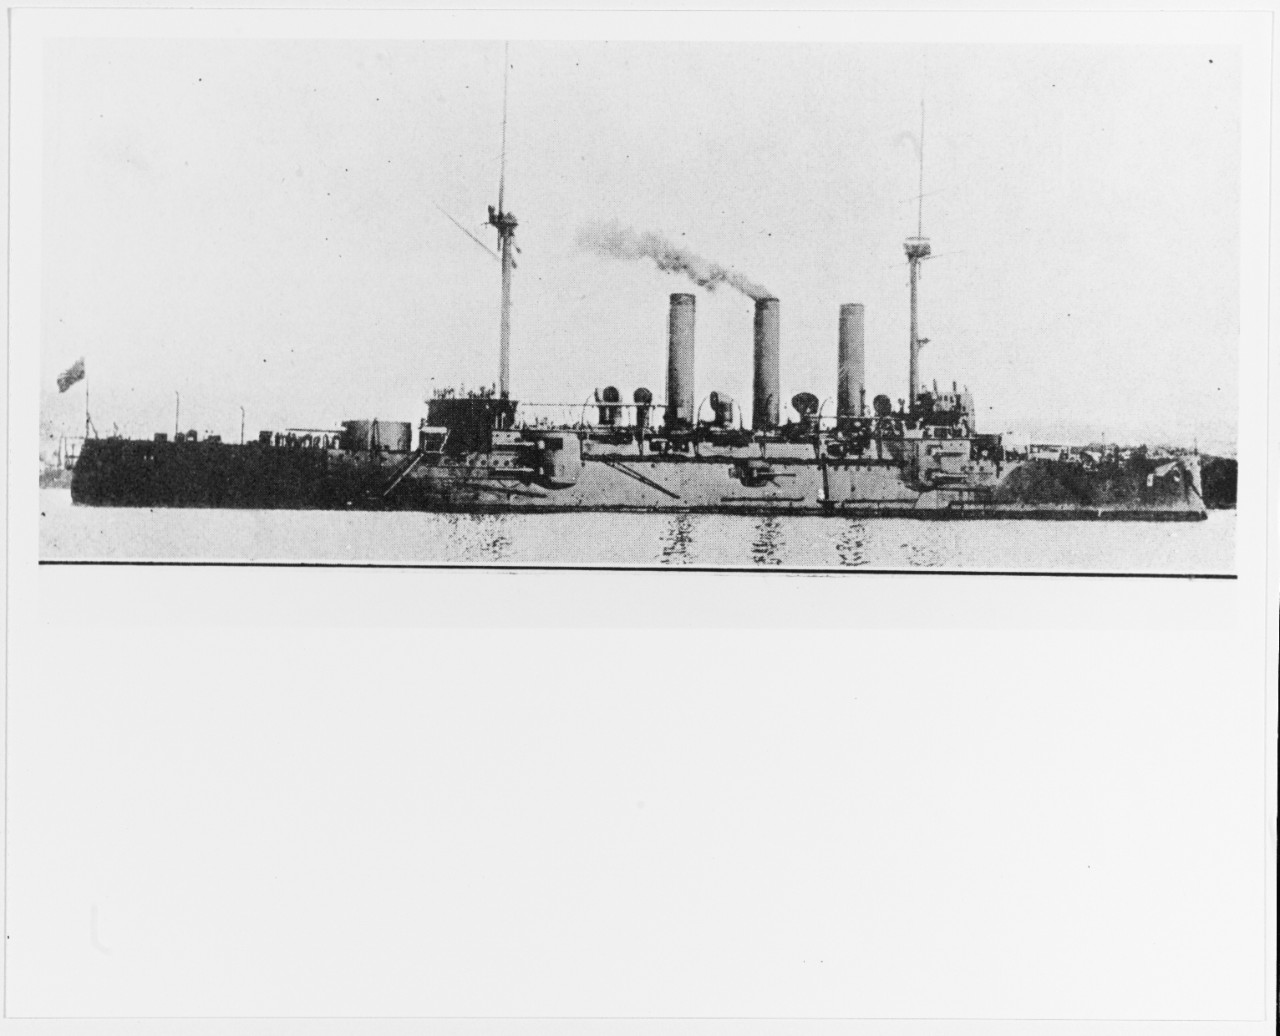 IWATE (Japanese armored cruiser, 1901-1945)